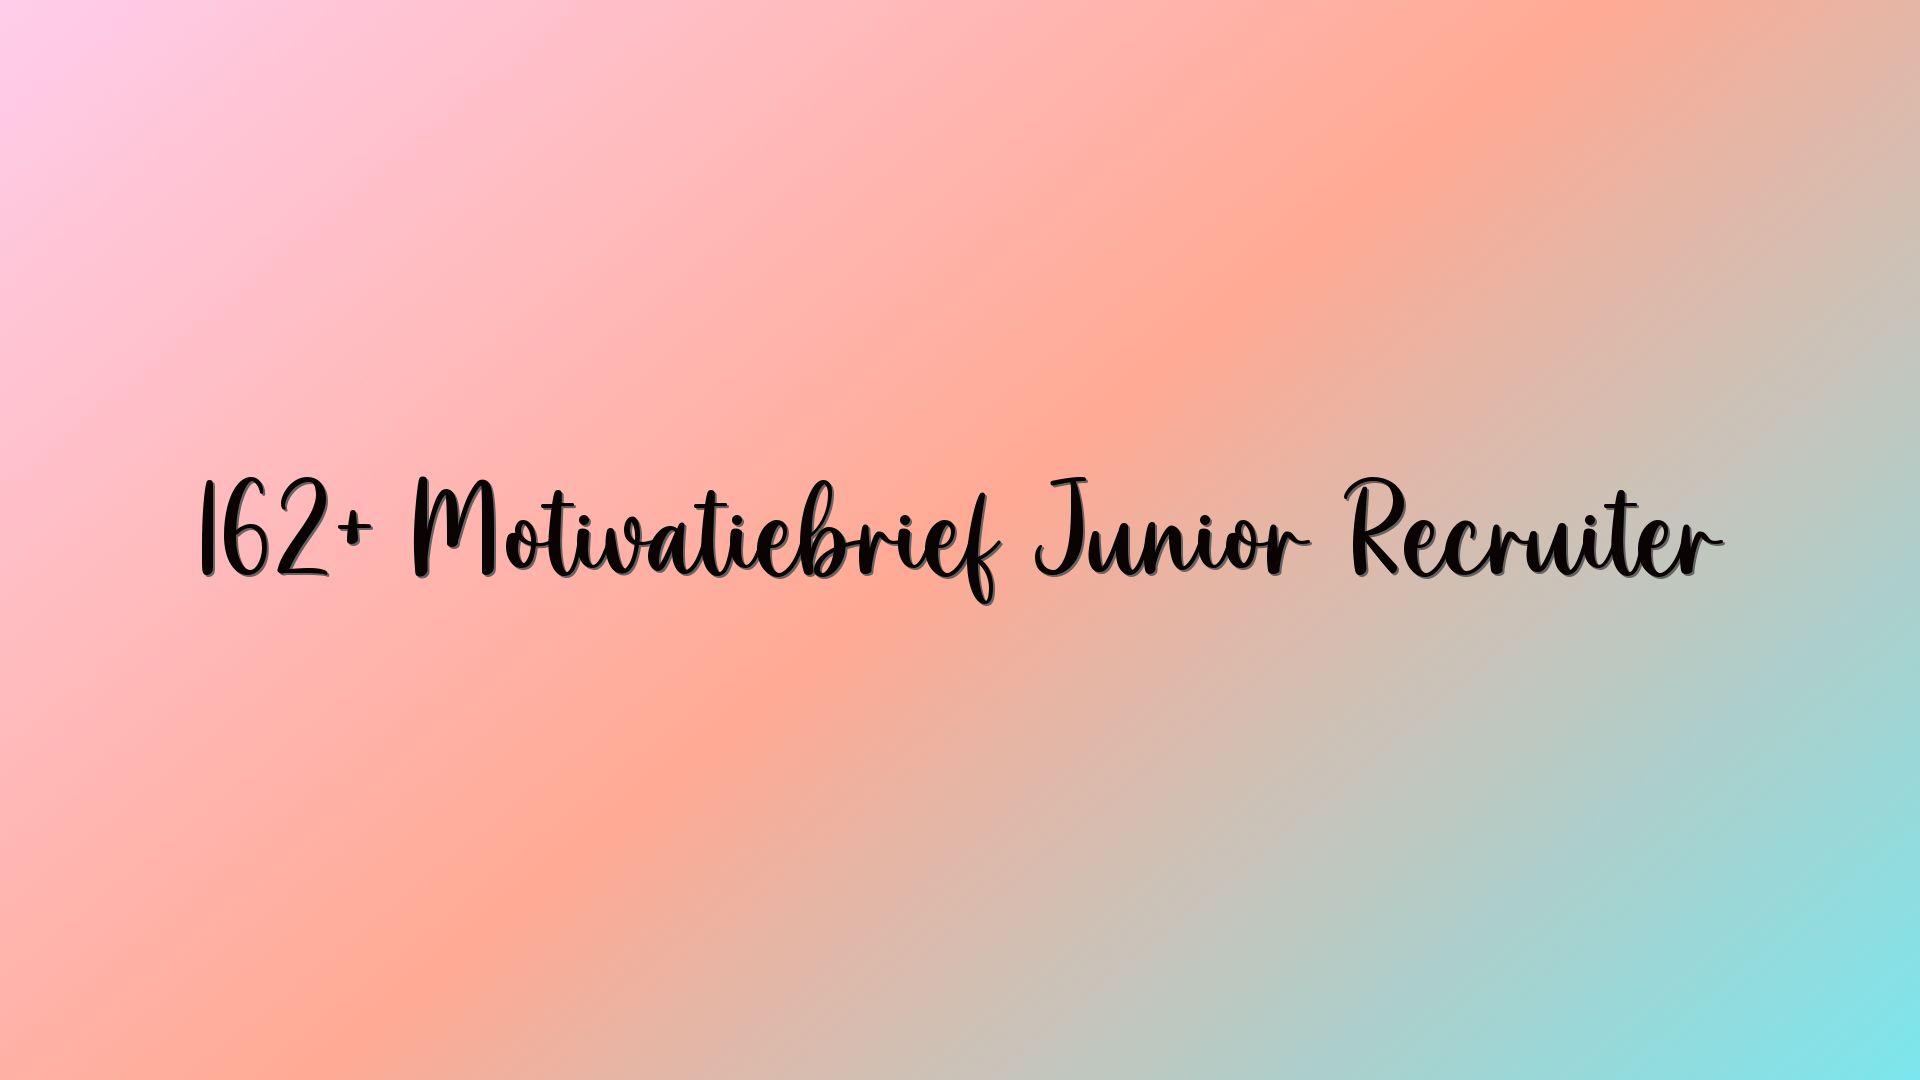 162+ Motivatiebrief Junior Recruiter